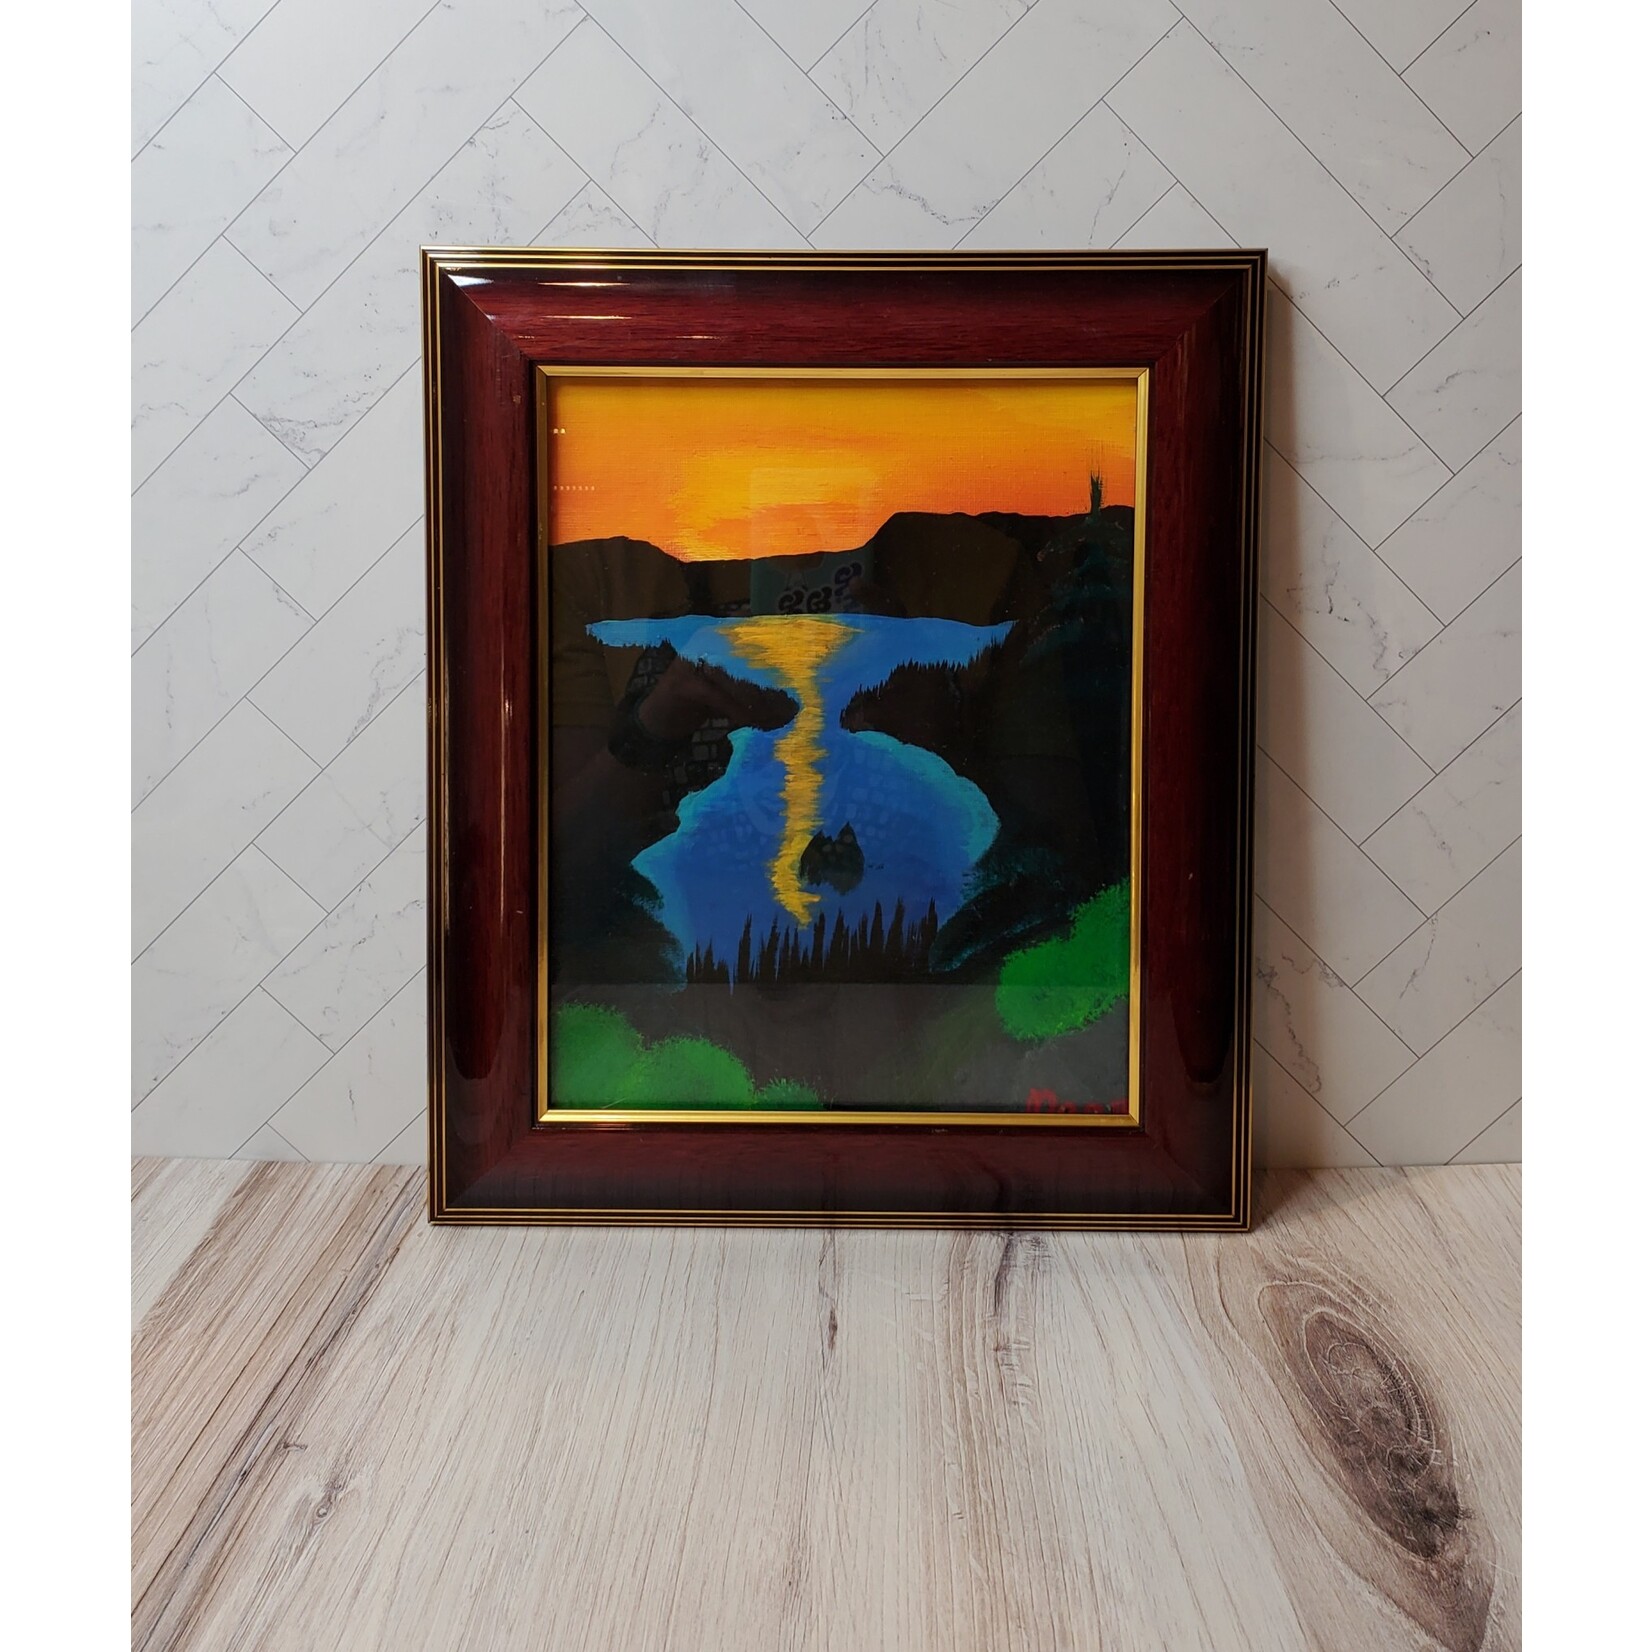 Dean Shreve "Emerald Bay" - original acrylic on canvas - framed